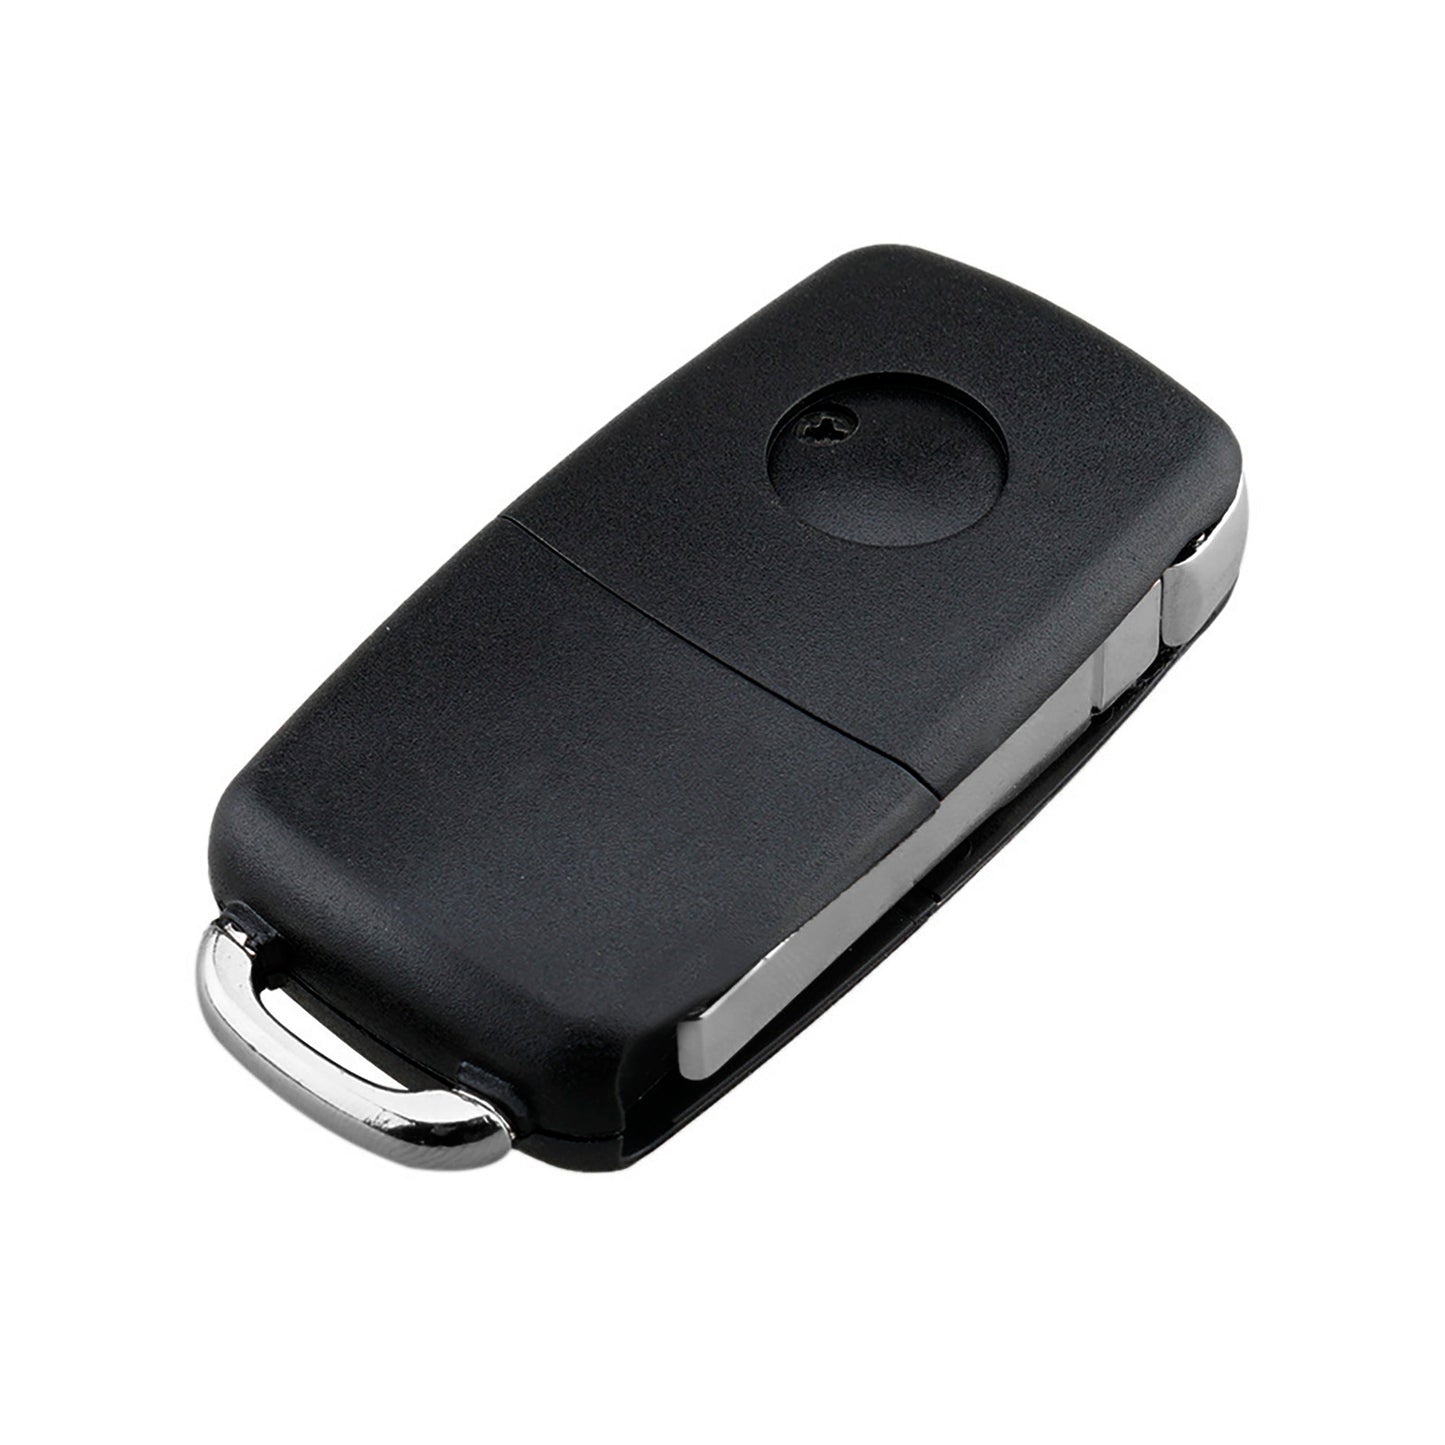 4 Buttons 315MHz Keyless Entry Fob Remote Car Key For 2002-2006 Volkswagen Beetle Golf Jetta Passat FCC ID: 1J0-959-753-DC 1J0-959-753-AM SKU : J122